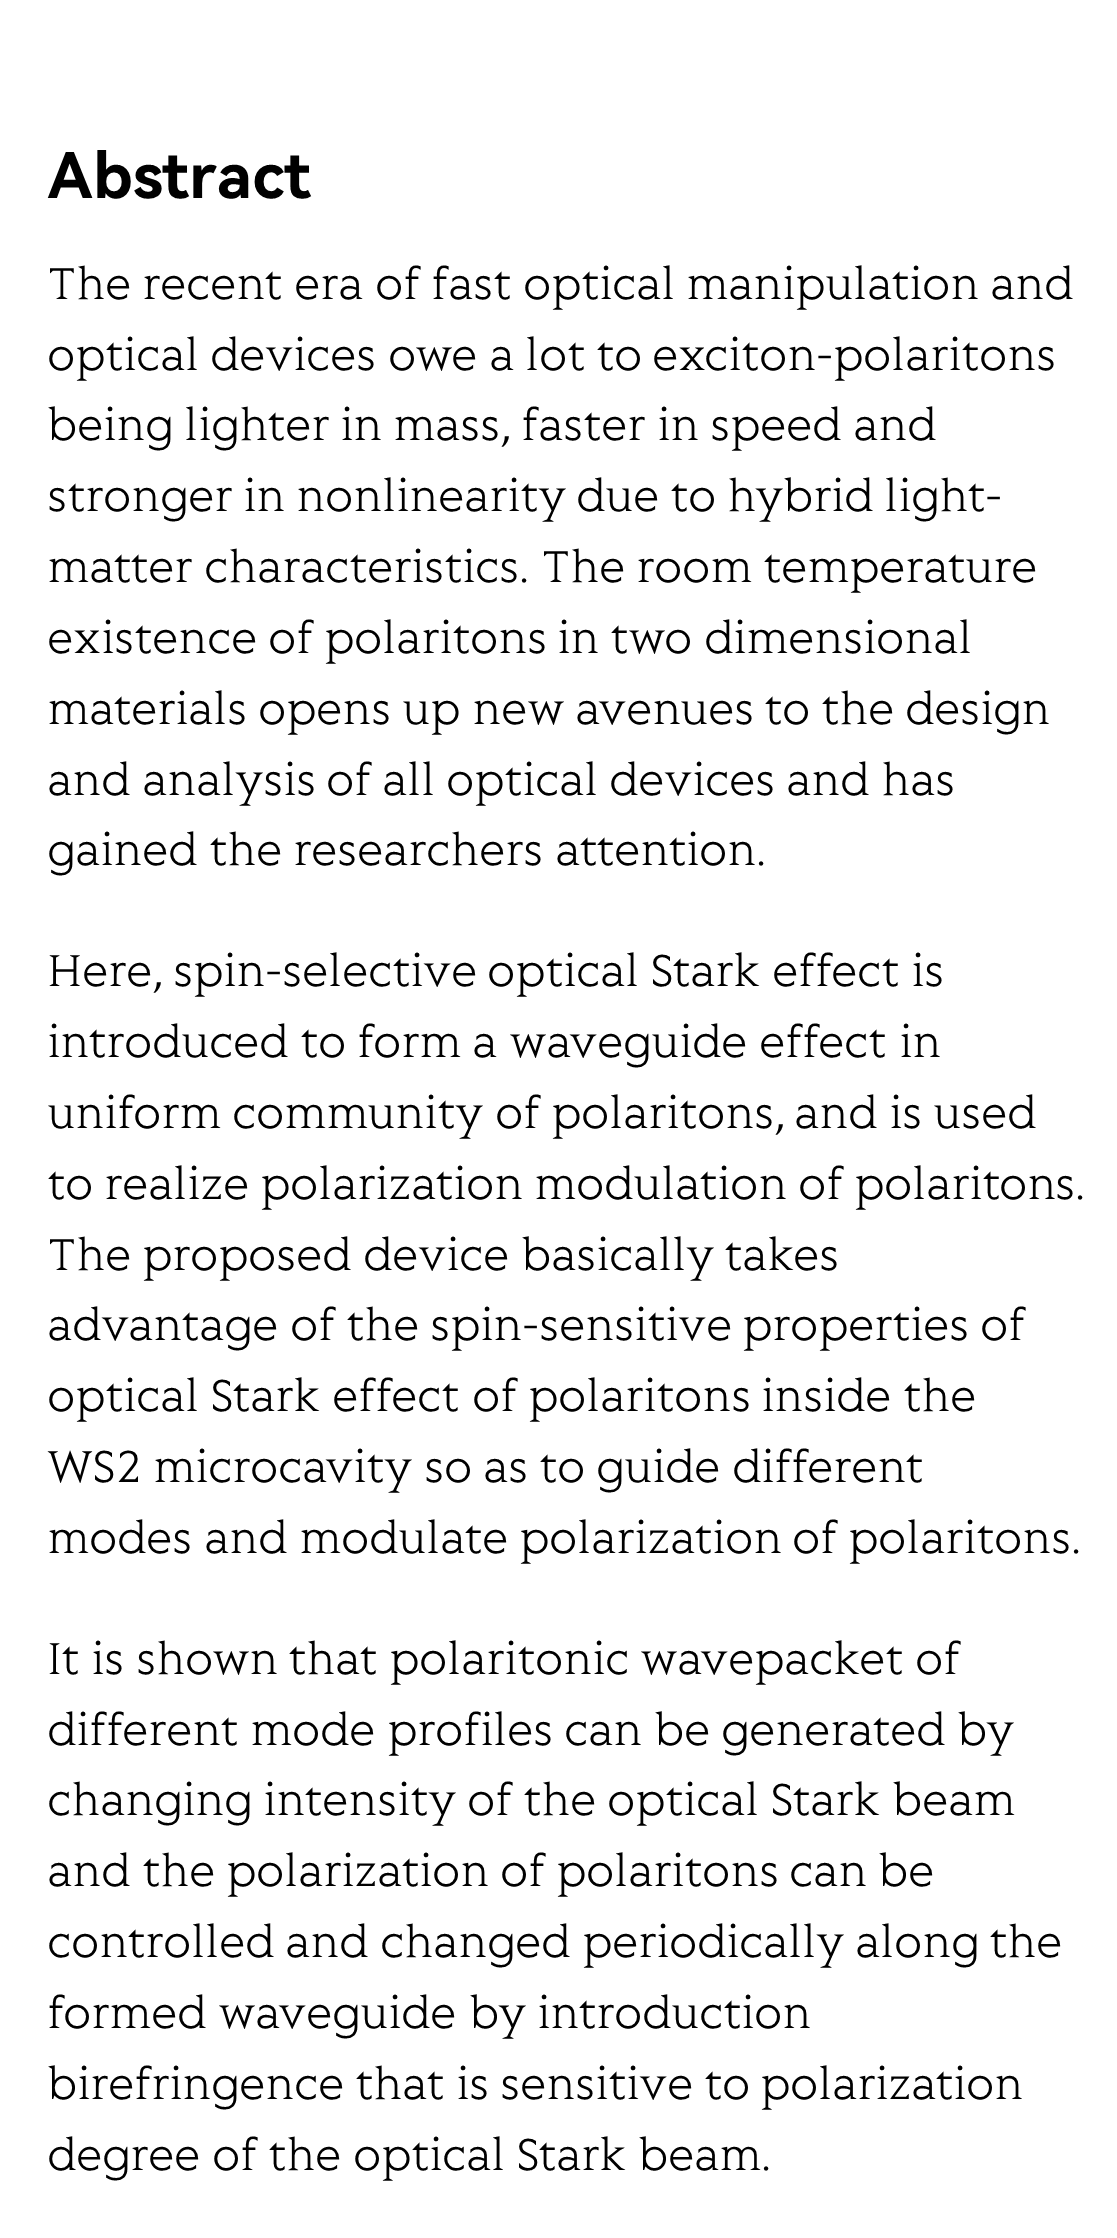 Exciton-polariton based WS2 polarization modulator controlled by optical Stark beam_2